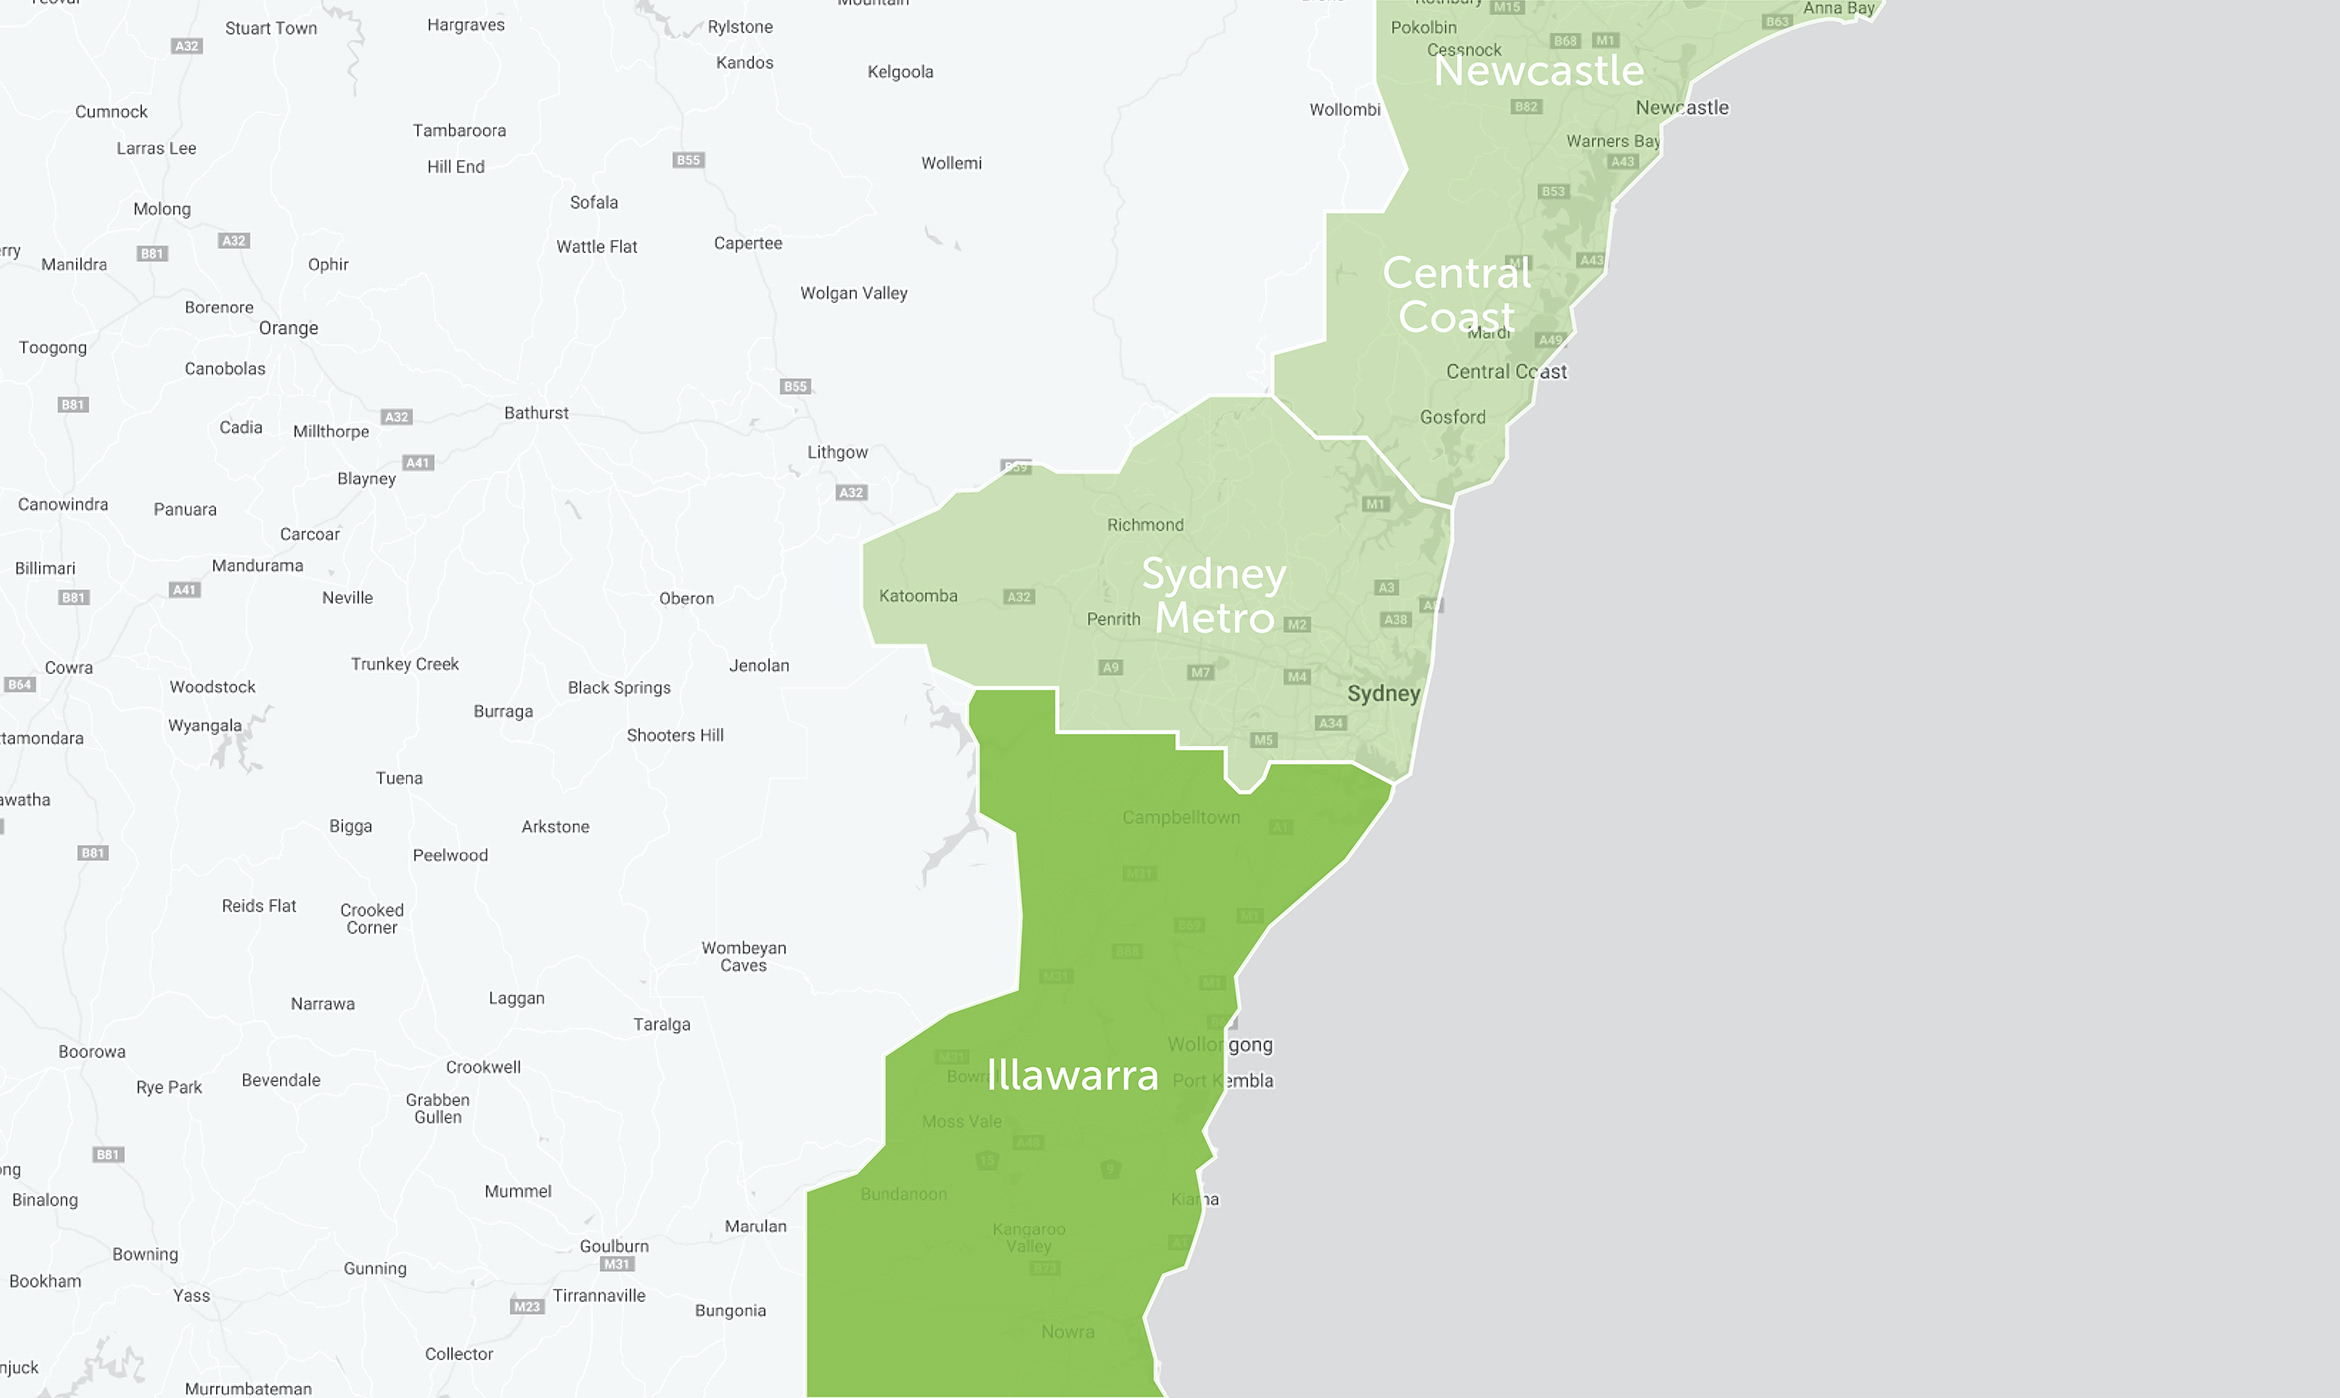 Map of Newcastle, Central Coast, Sydney Metro, and Illawarra